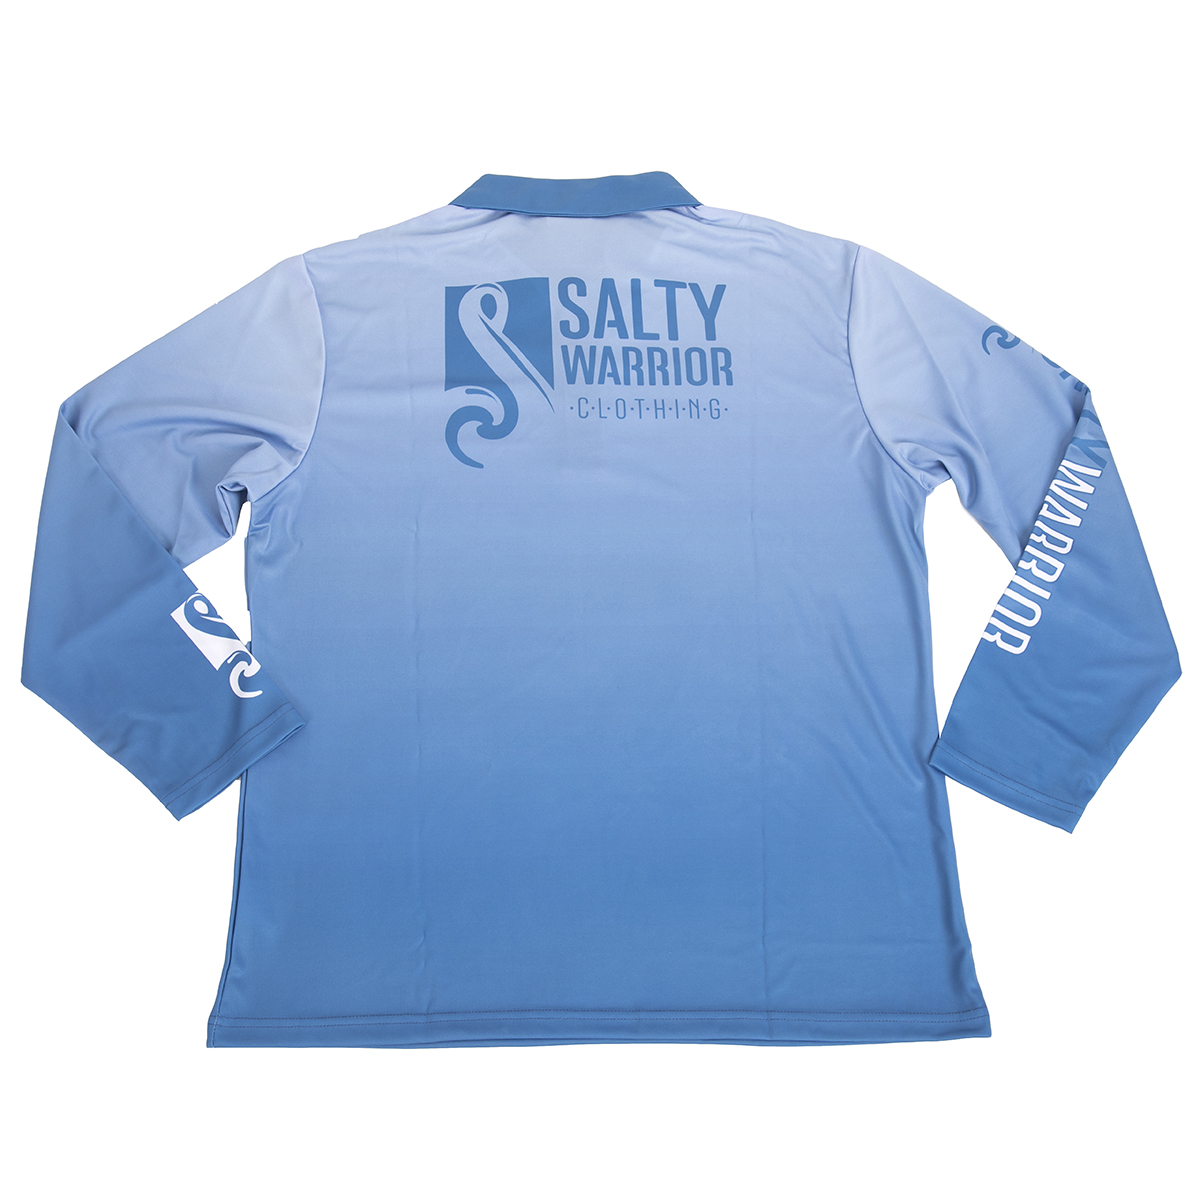 Plain Blue Shirt - Salty Warrior Clothing - Fishing apparel designed by  fisherman for fisherman